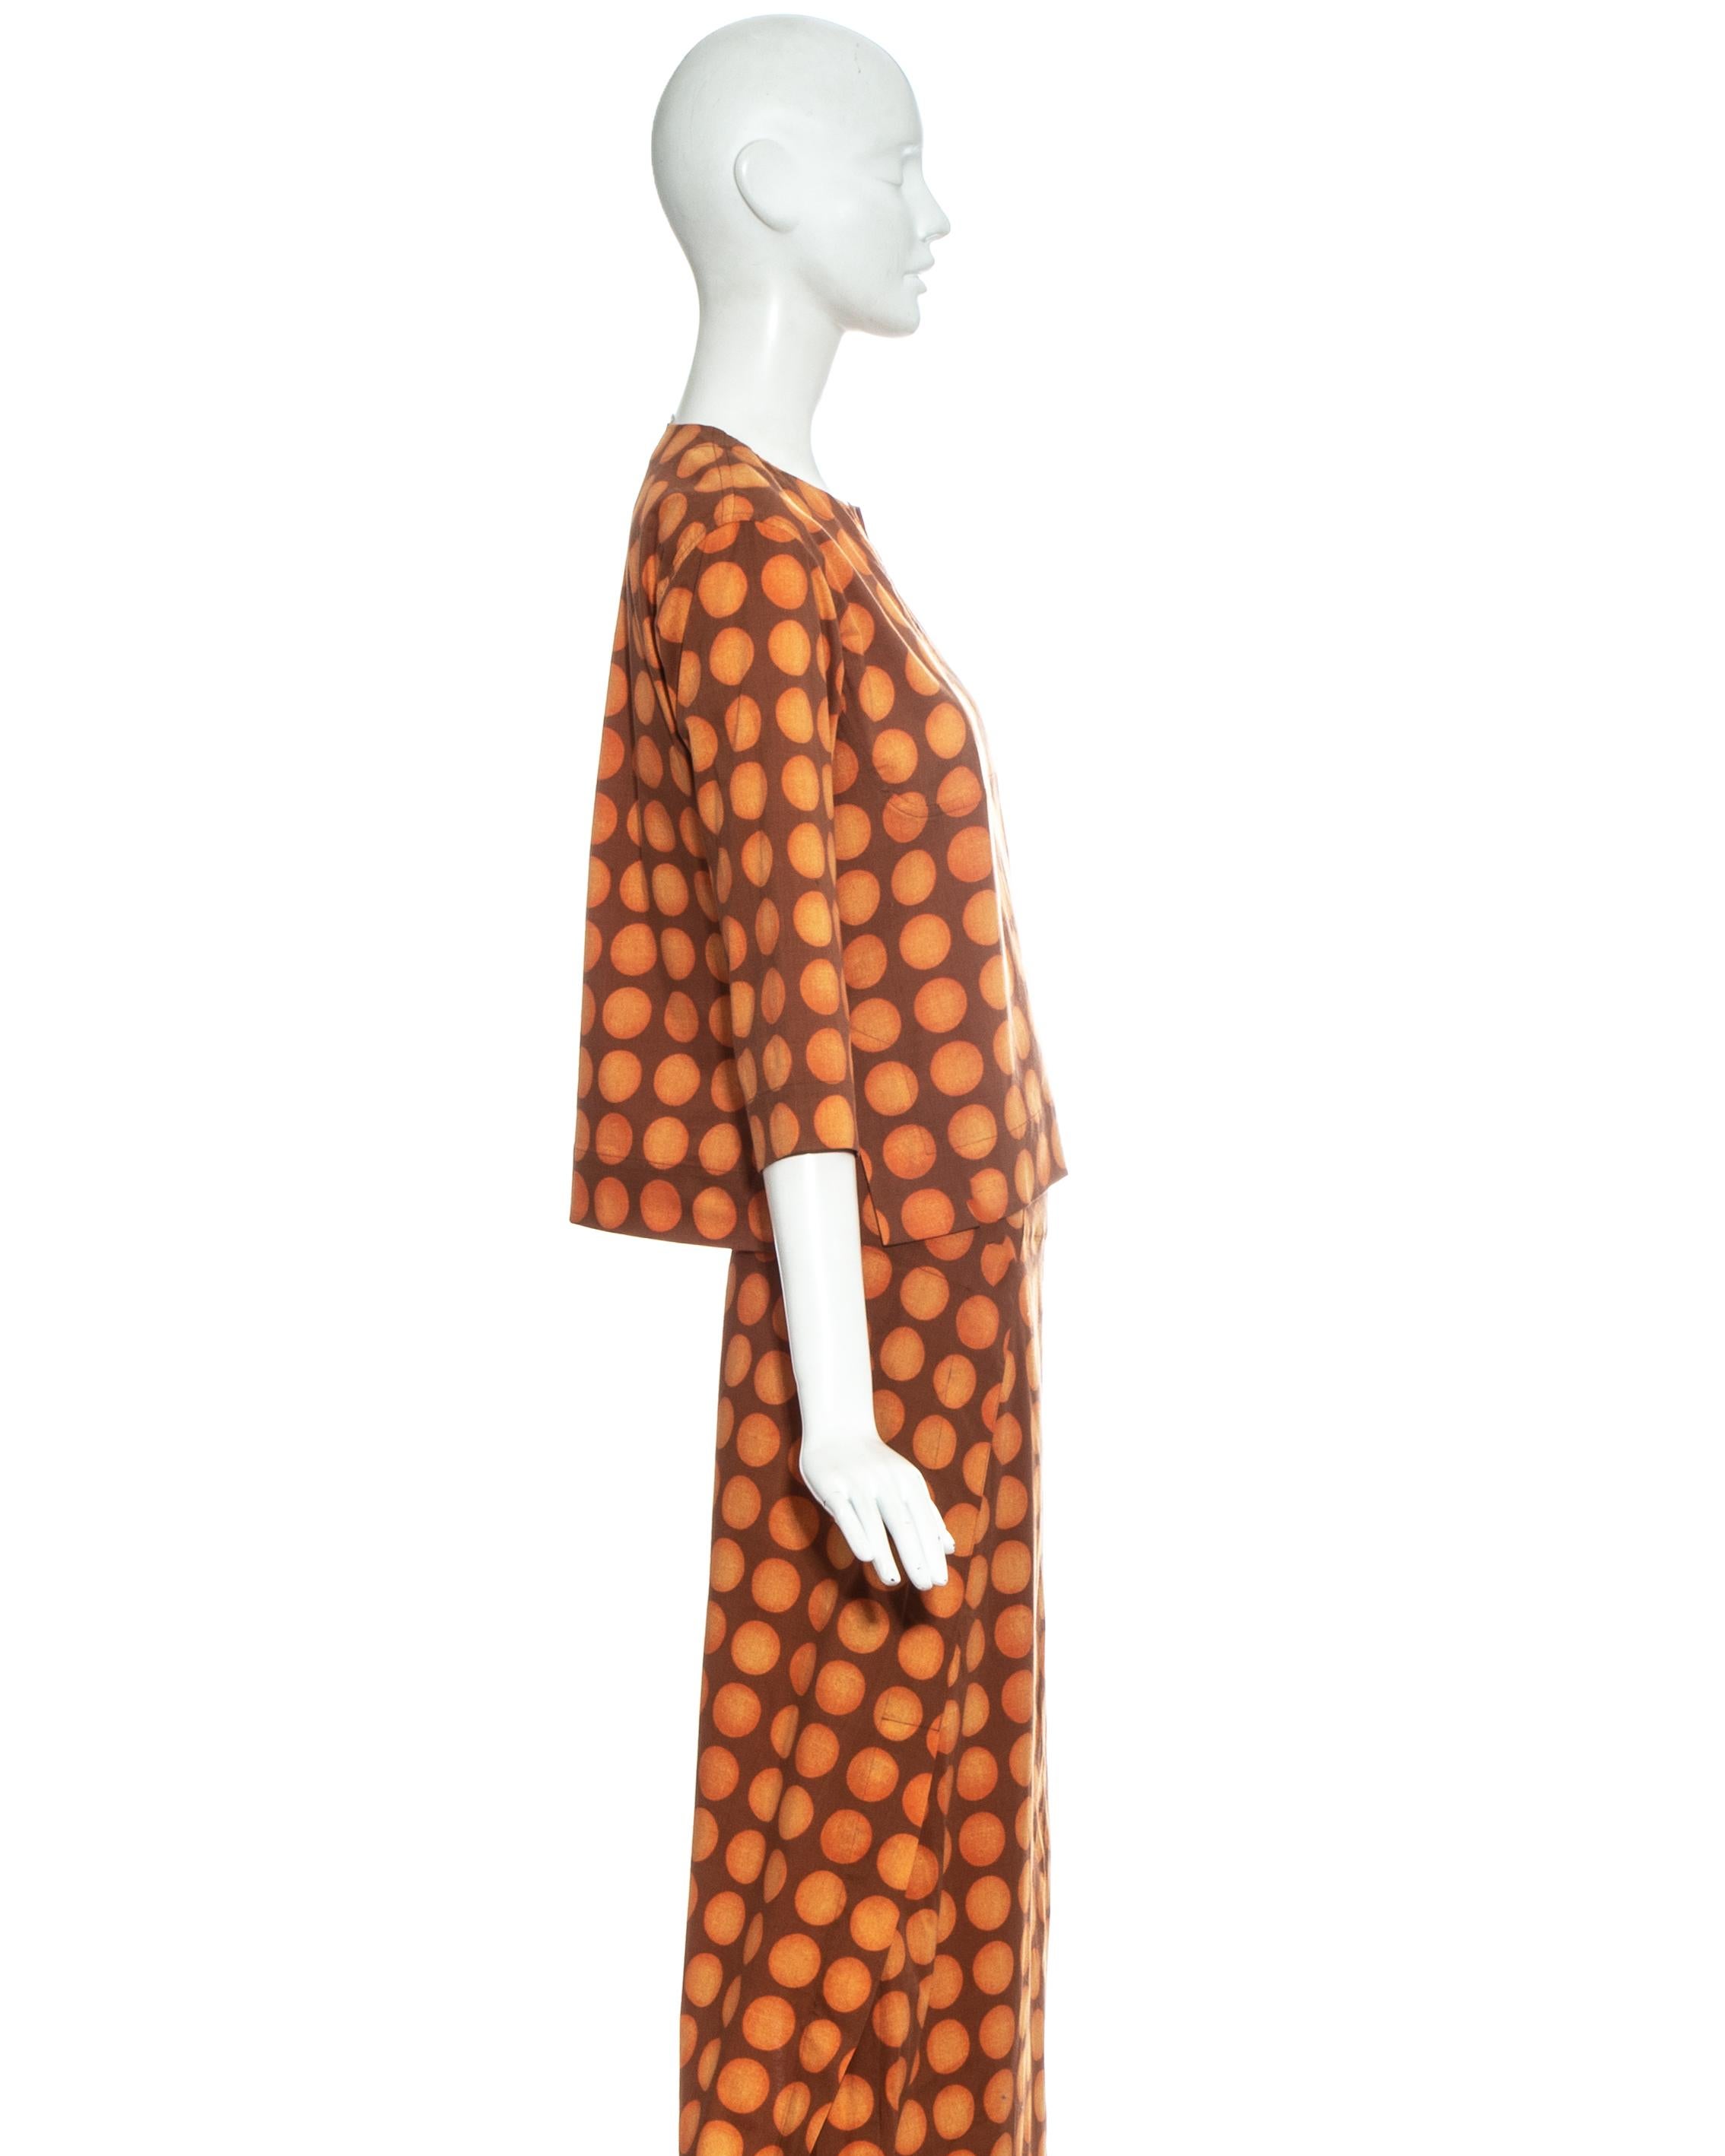 Women's Issey Miyake orange polkadot printed cotton skirt suit, ss 2001 For Sale